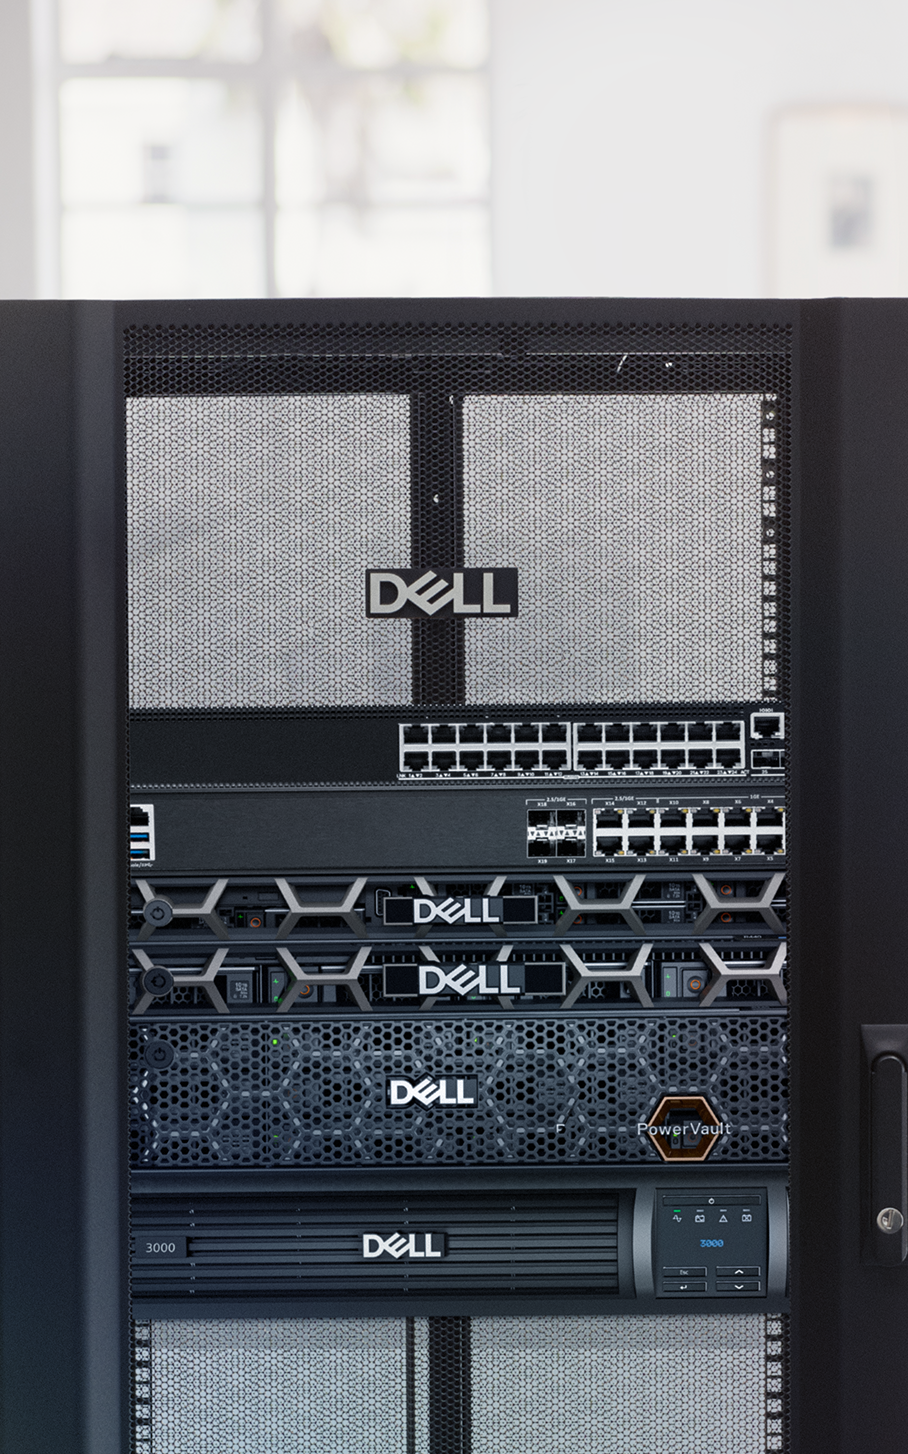 Dell explains servers